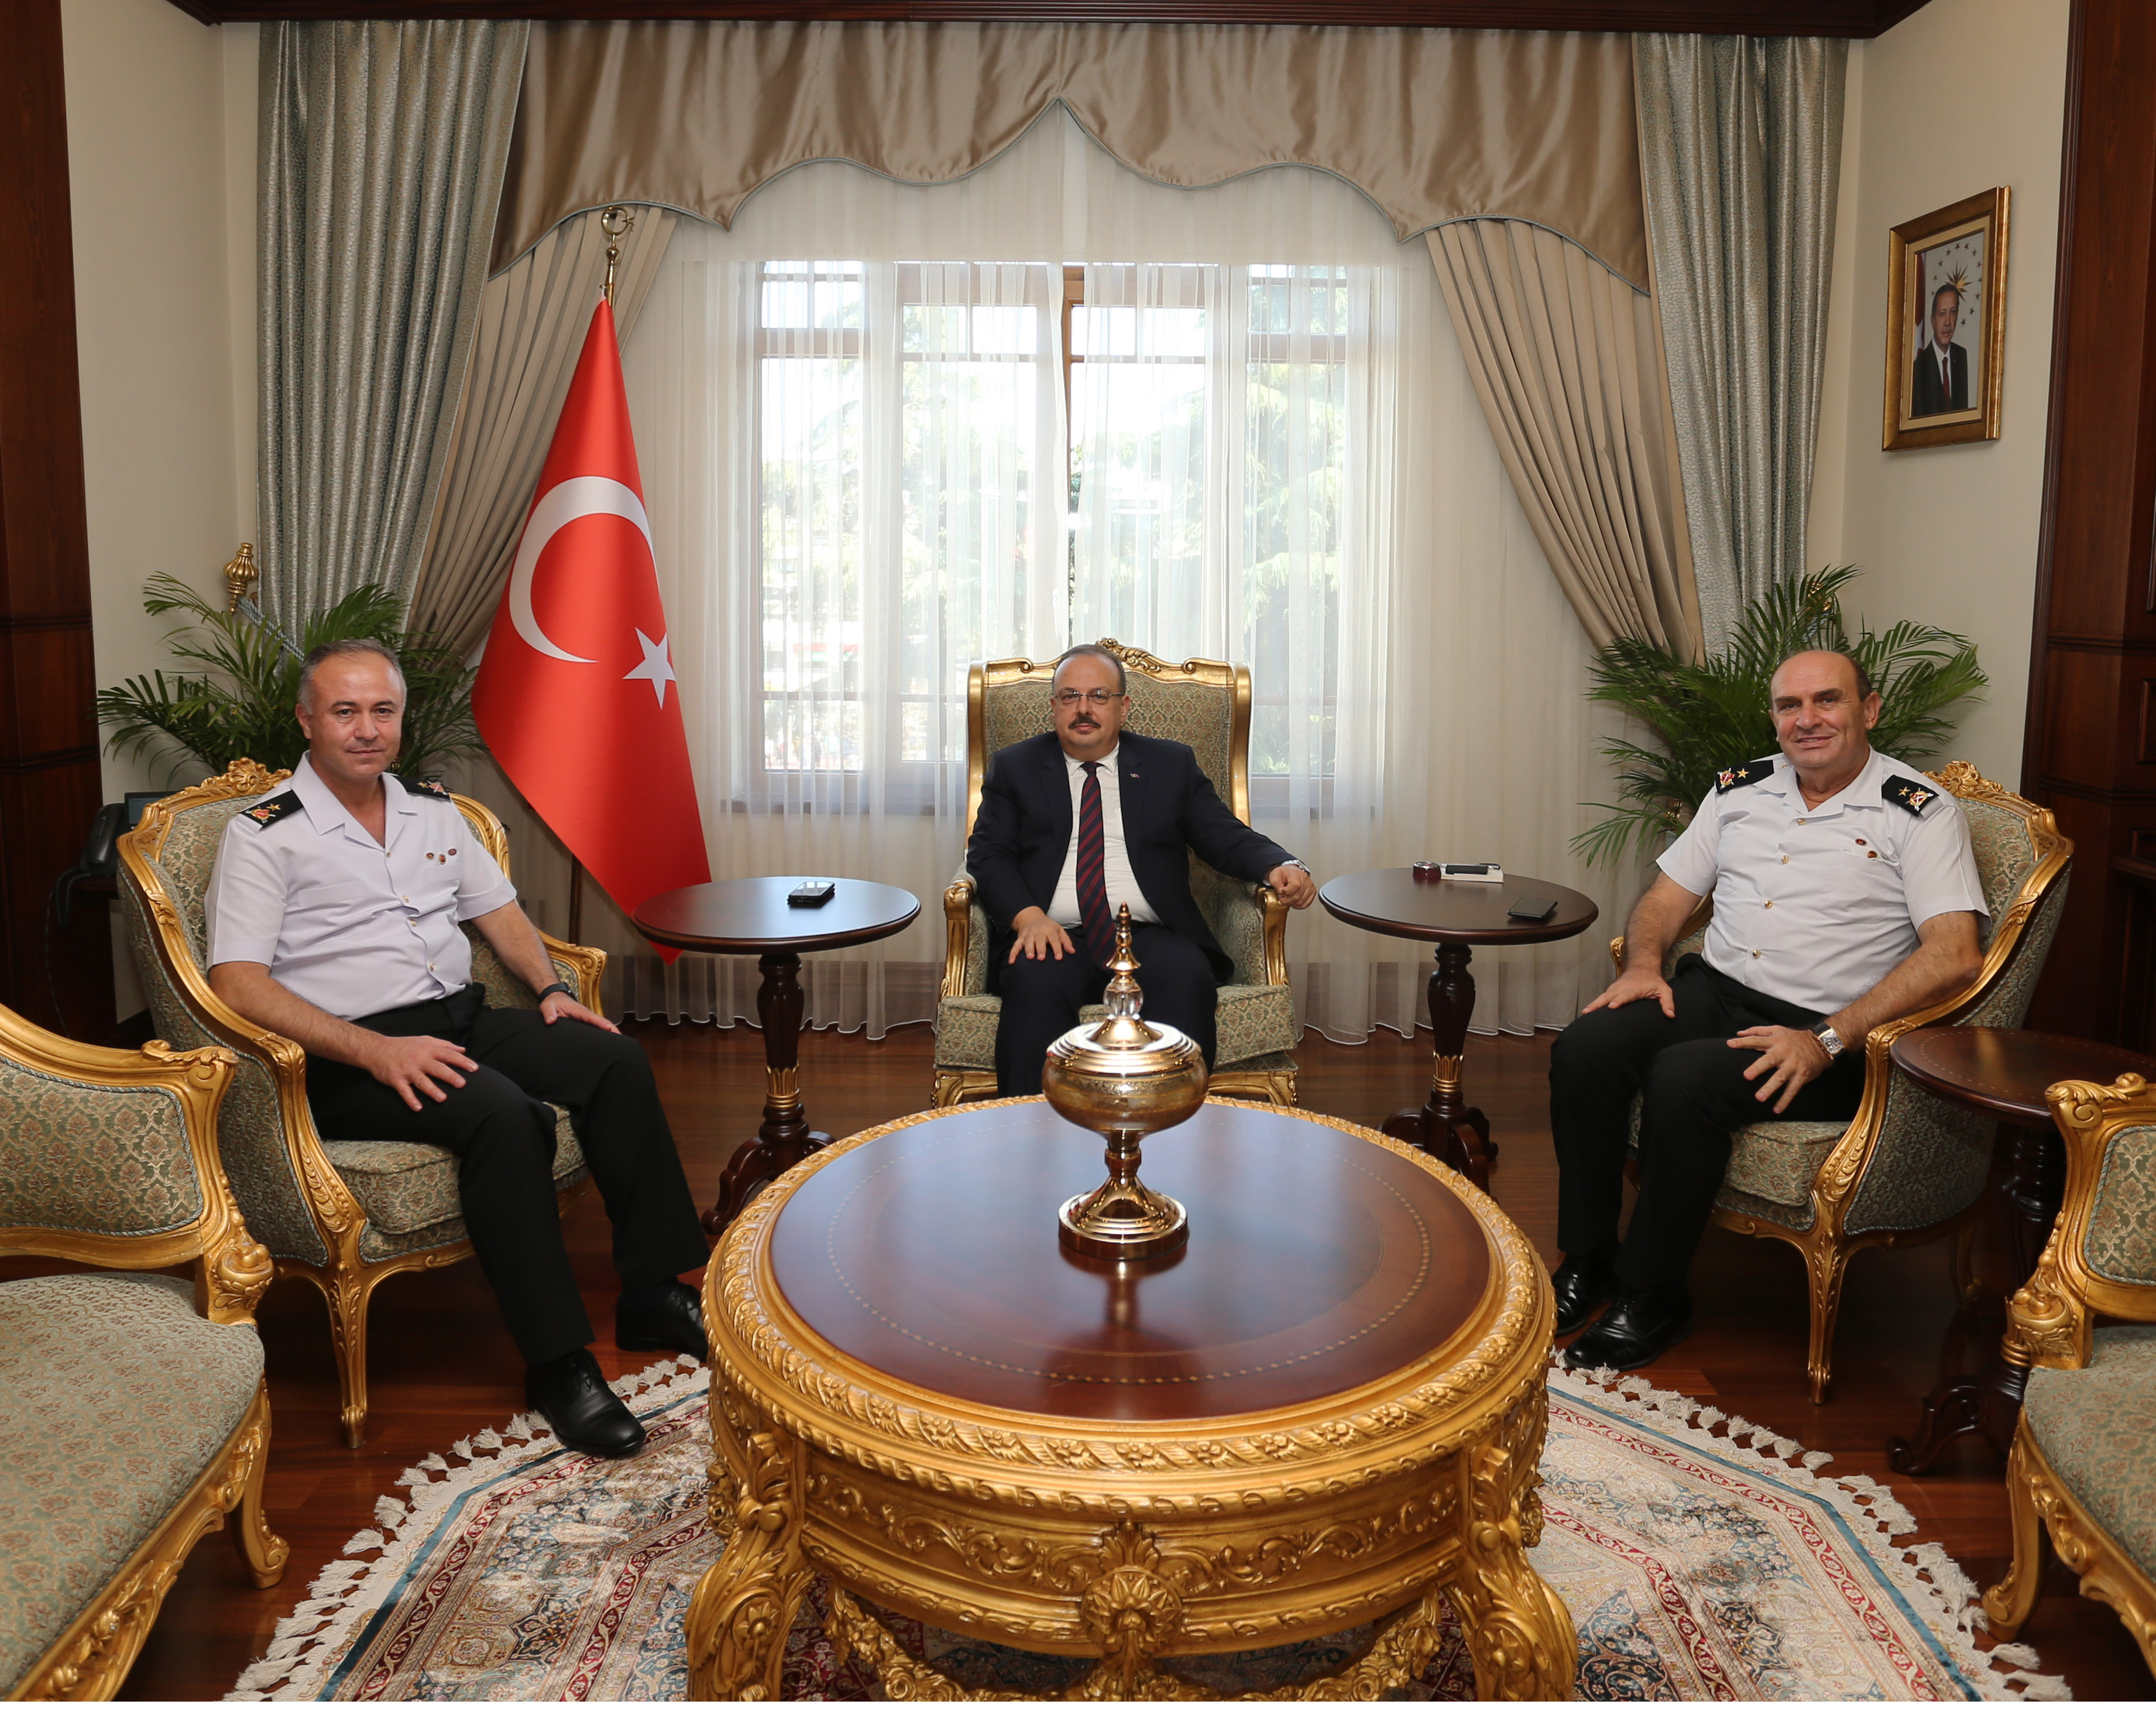 istanbul il jandarma komutani tuggeneral koroglu vali canbolat i ziyaret etti